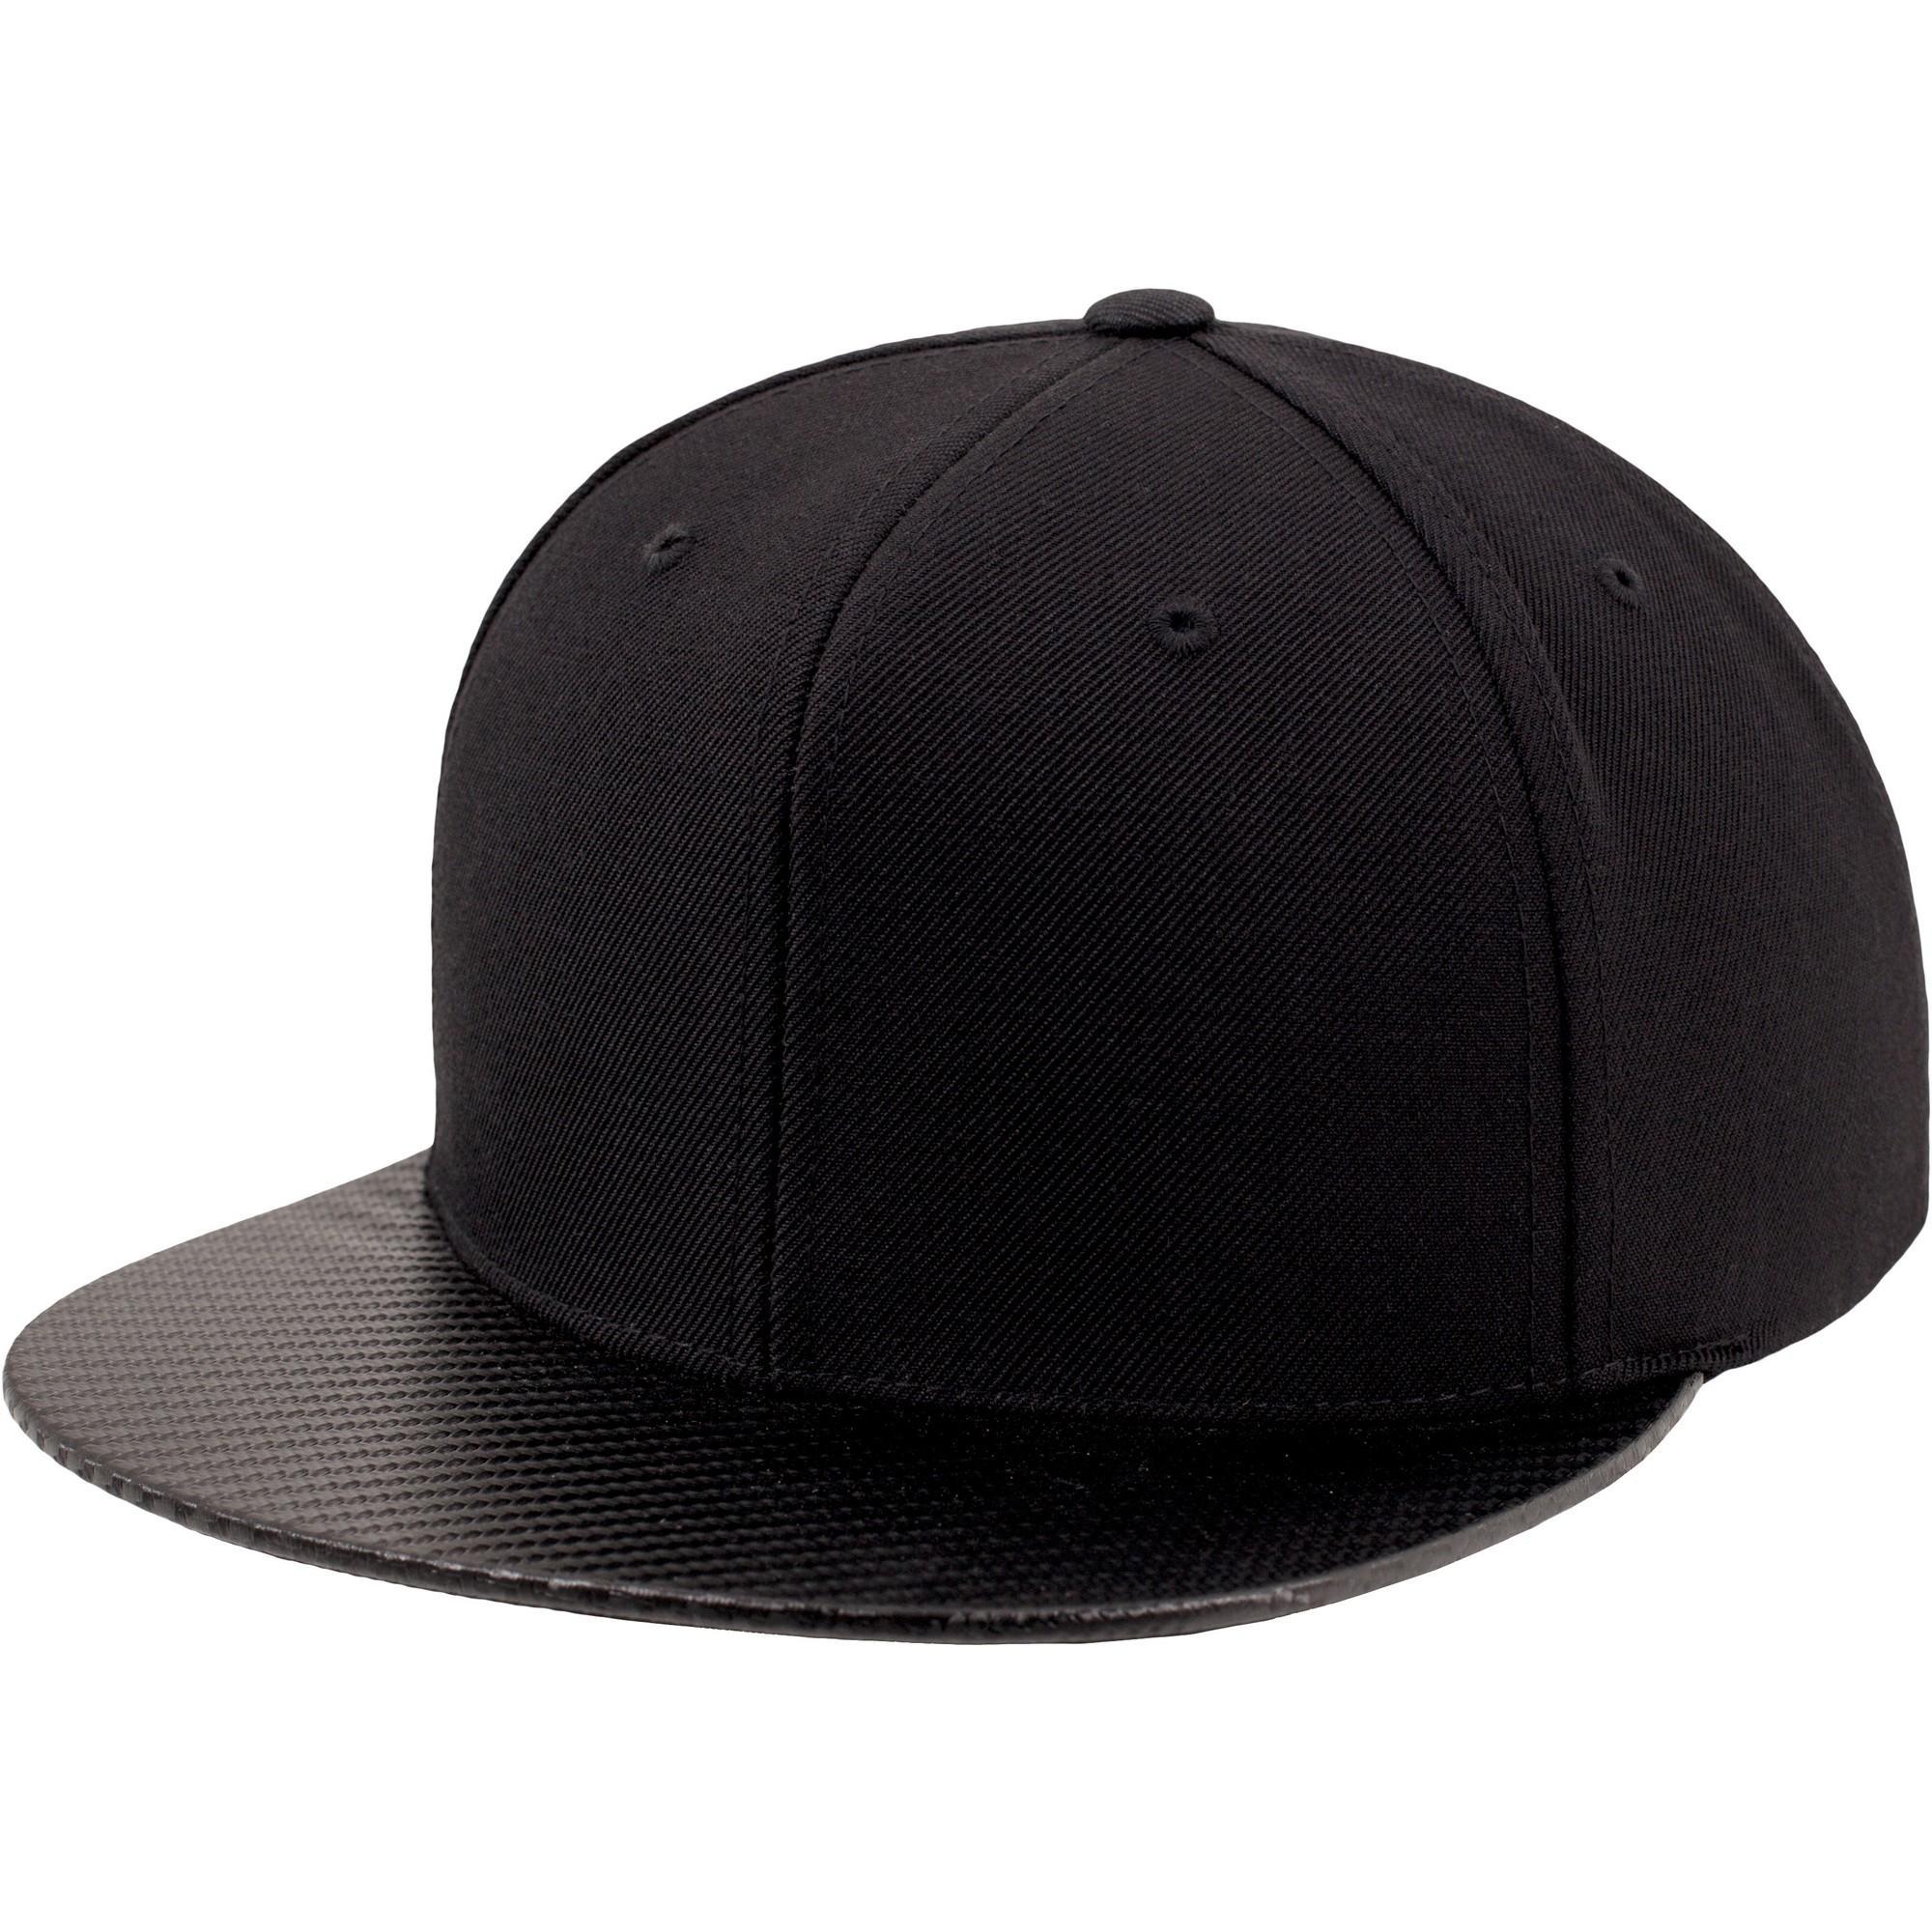 Flexfit by Yupoong Unisex Carbon Snapback Cap (Black) (One Size)